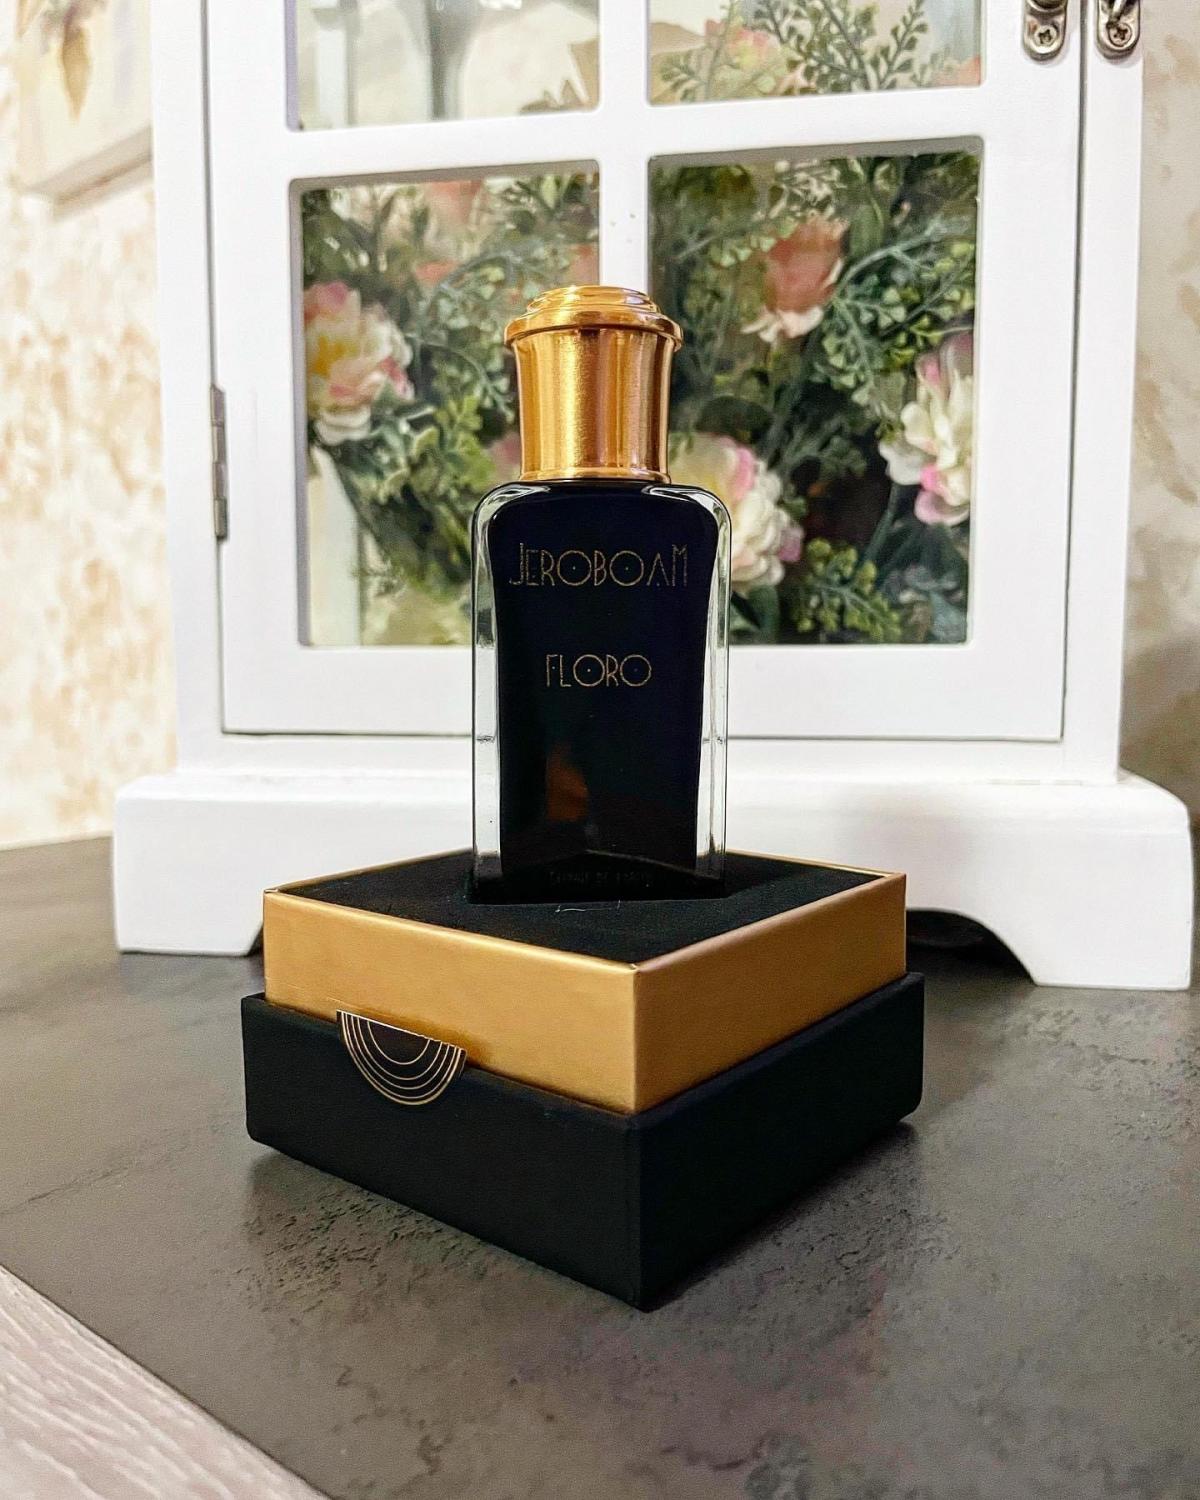 Floro Jeroboam perfume - a fragrance for women and men 2021